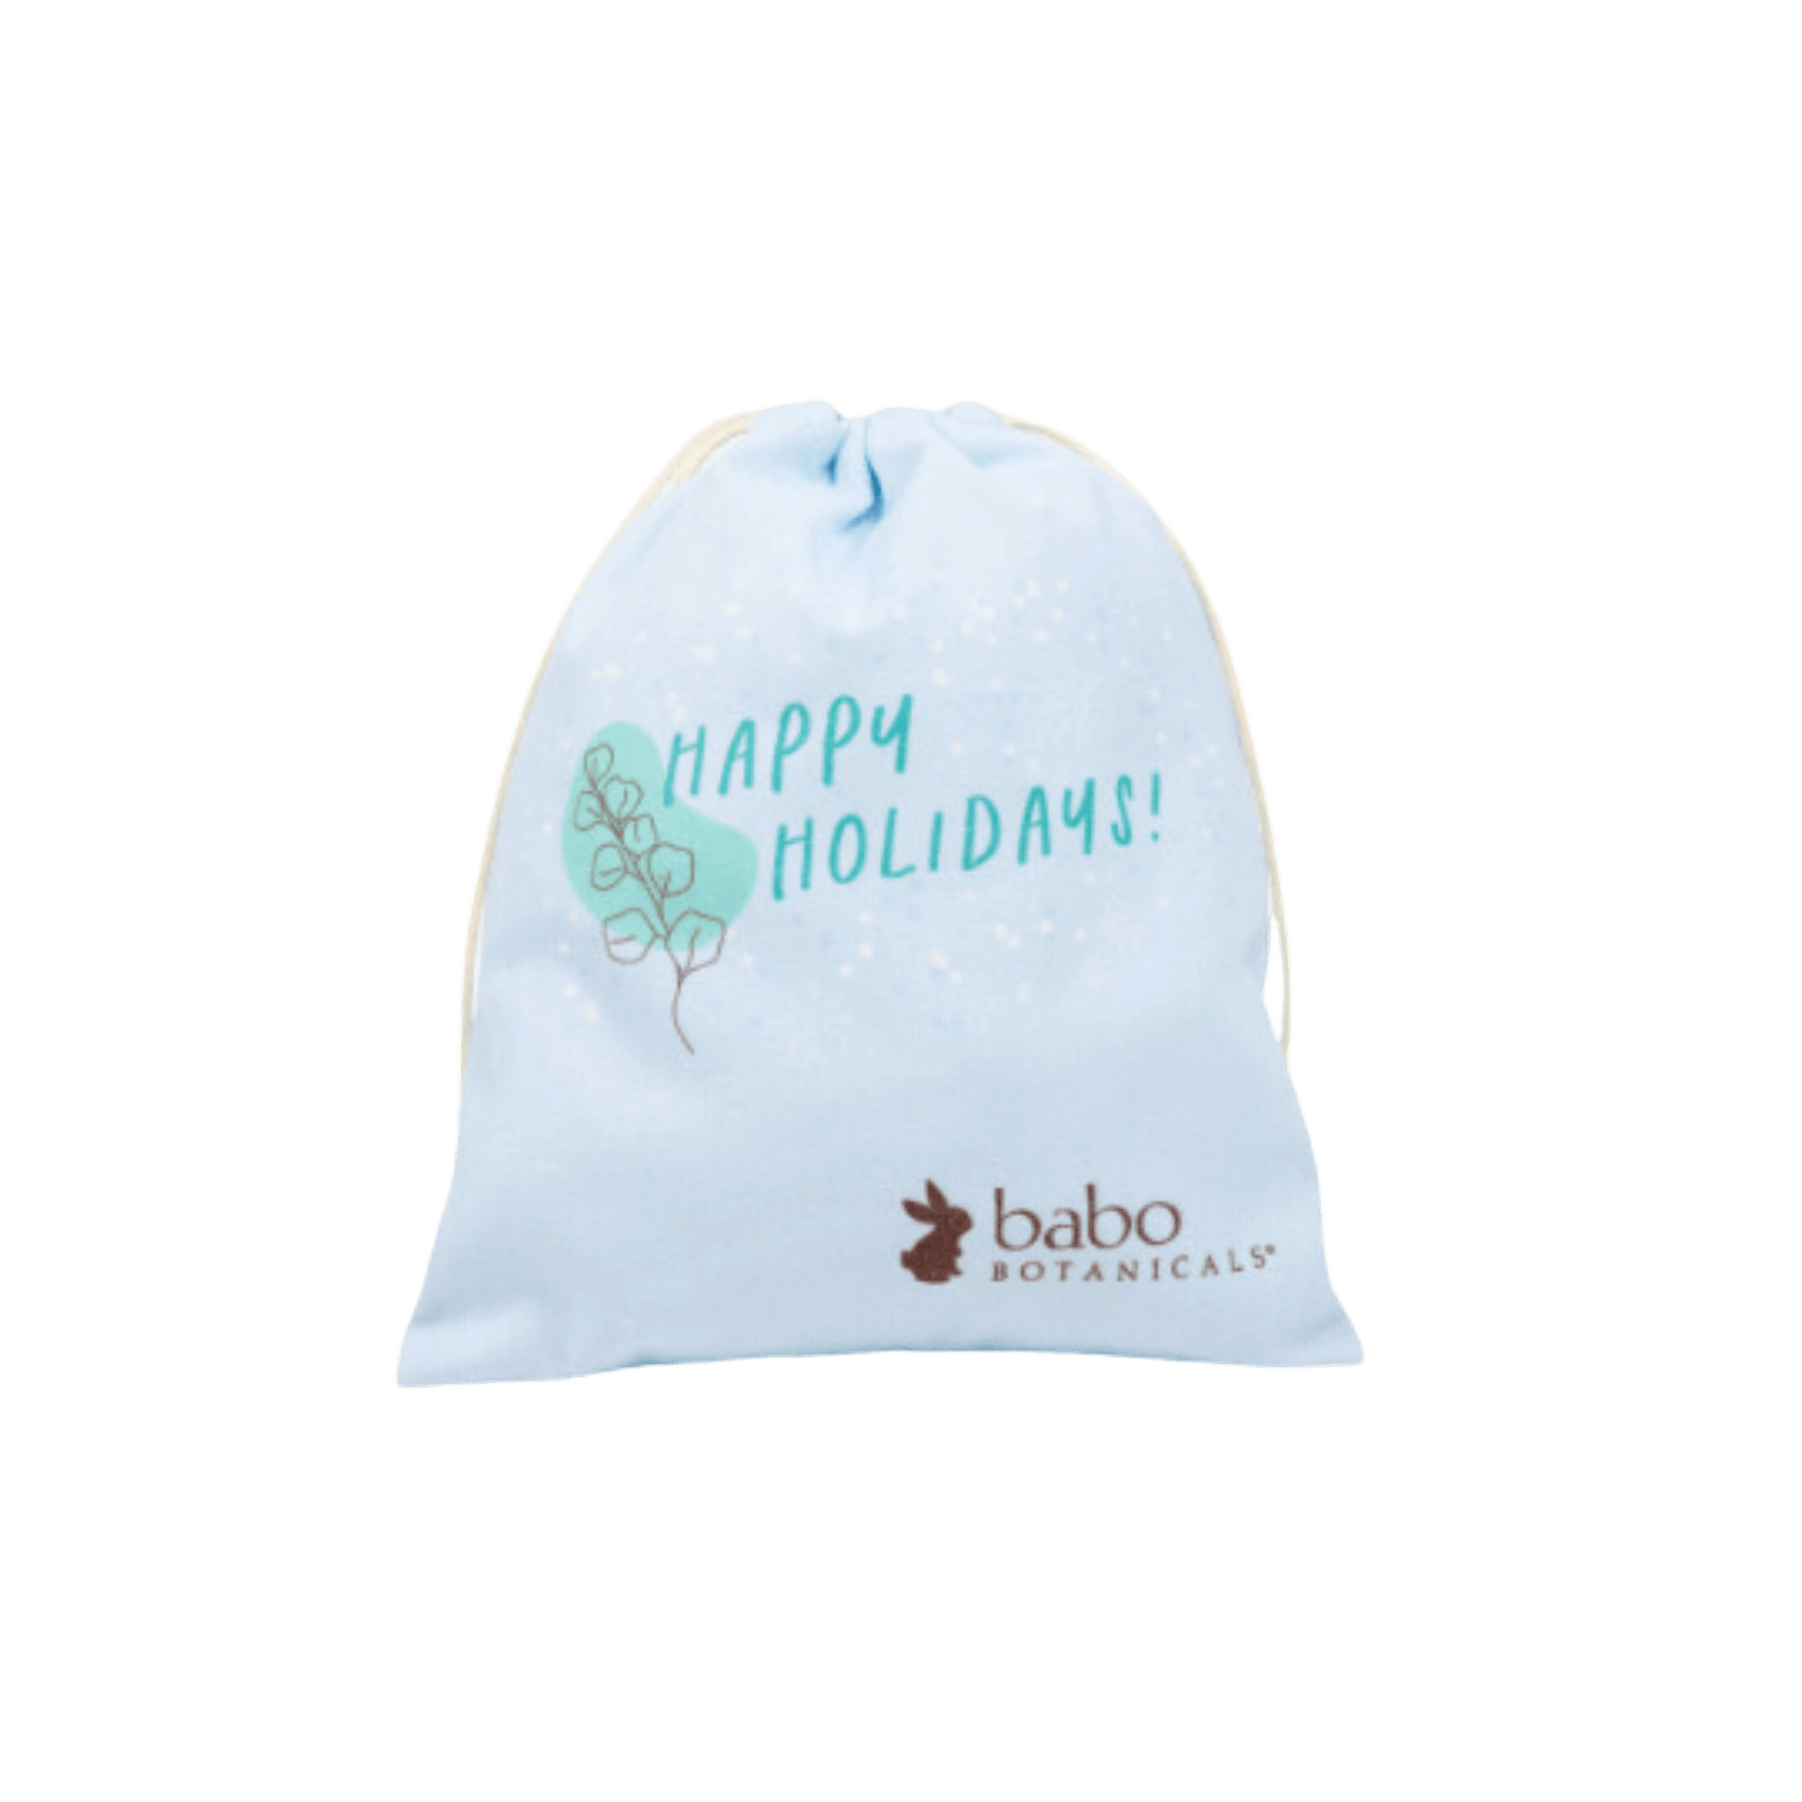 Babo Botanicals Holiday Gift bag